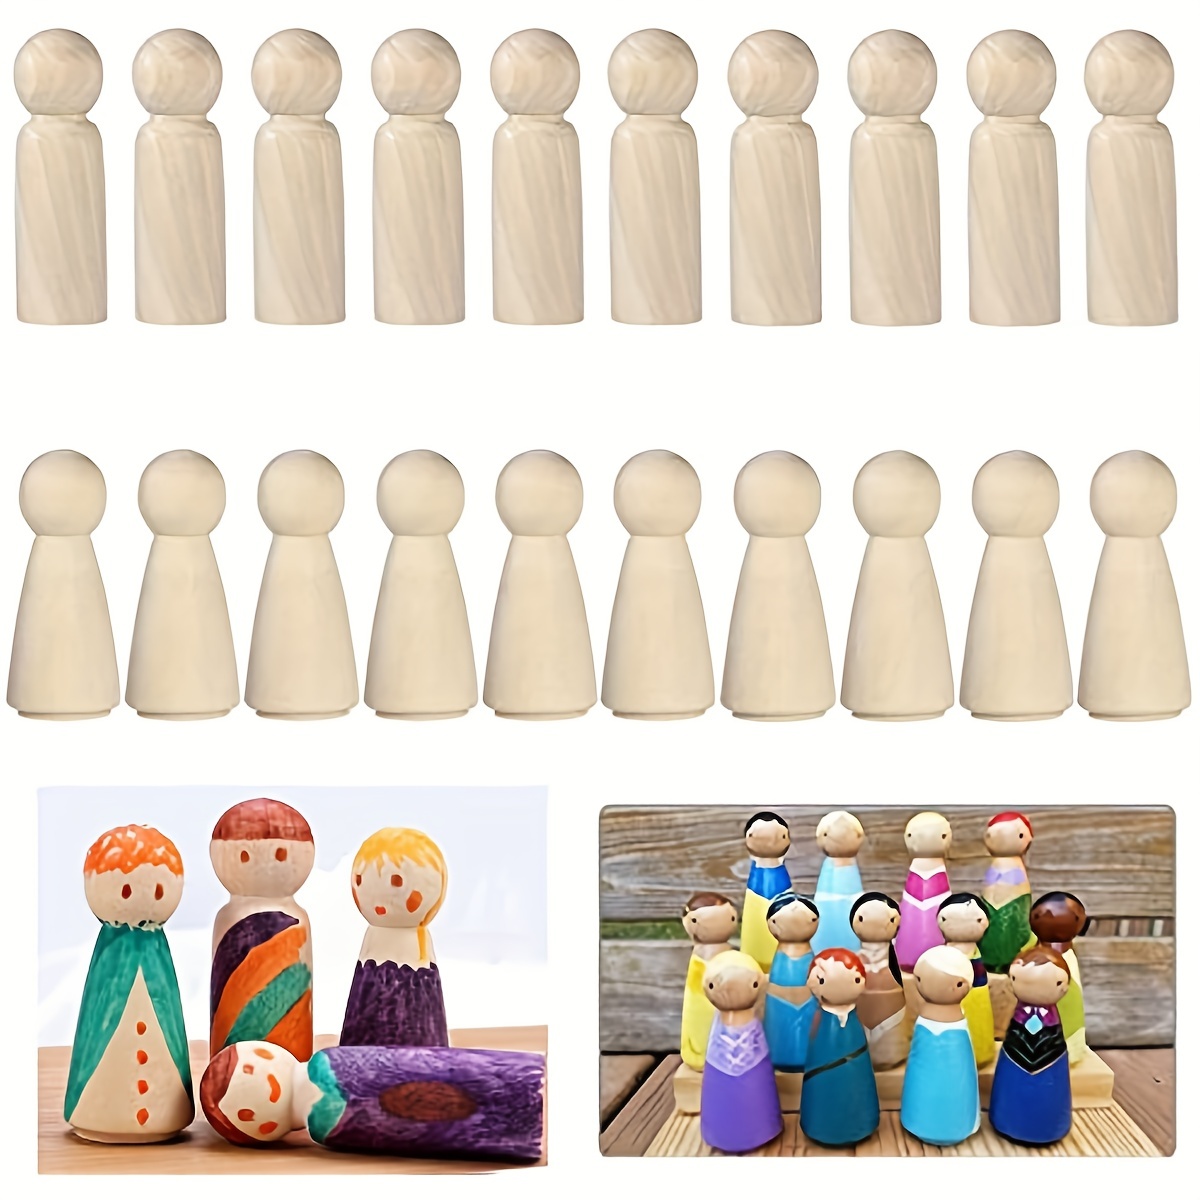 50pcs Wooden Peg Dolls Unfinished Baby 3-7cm Large Peg People